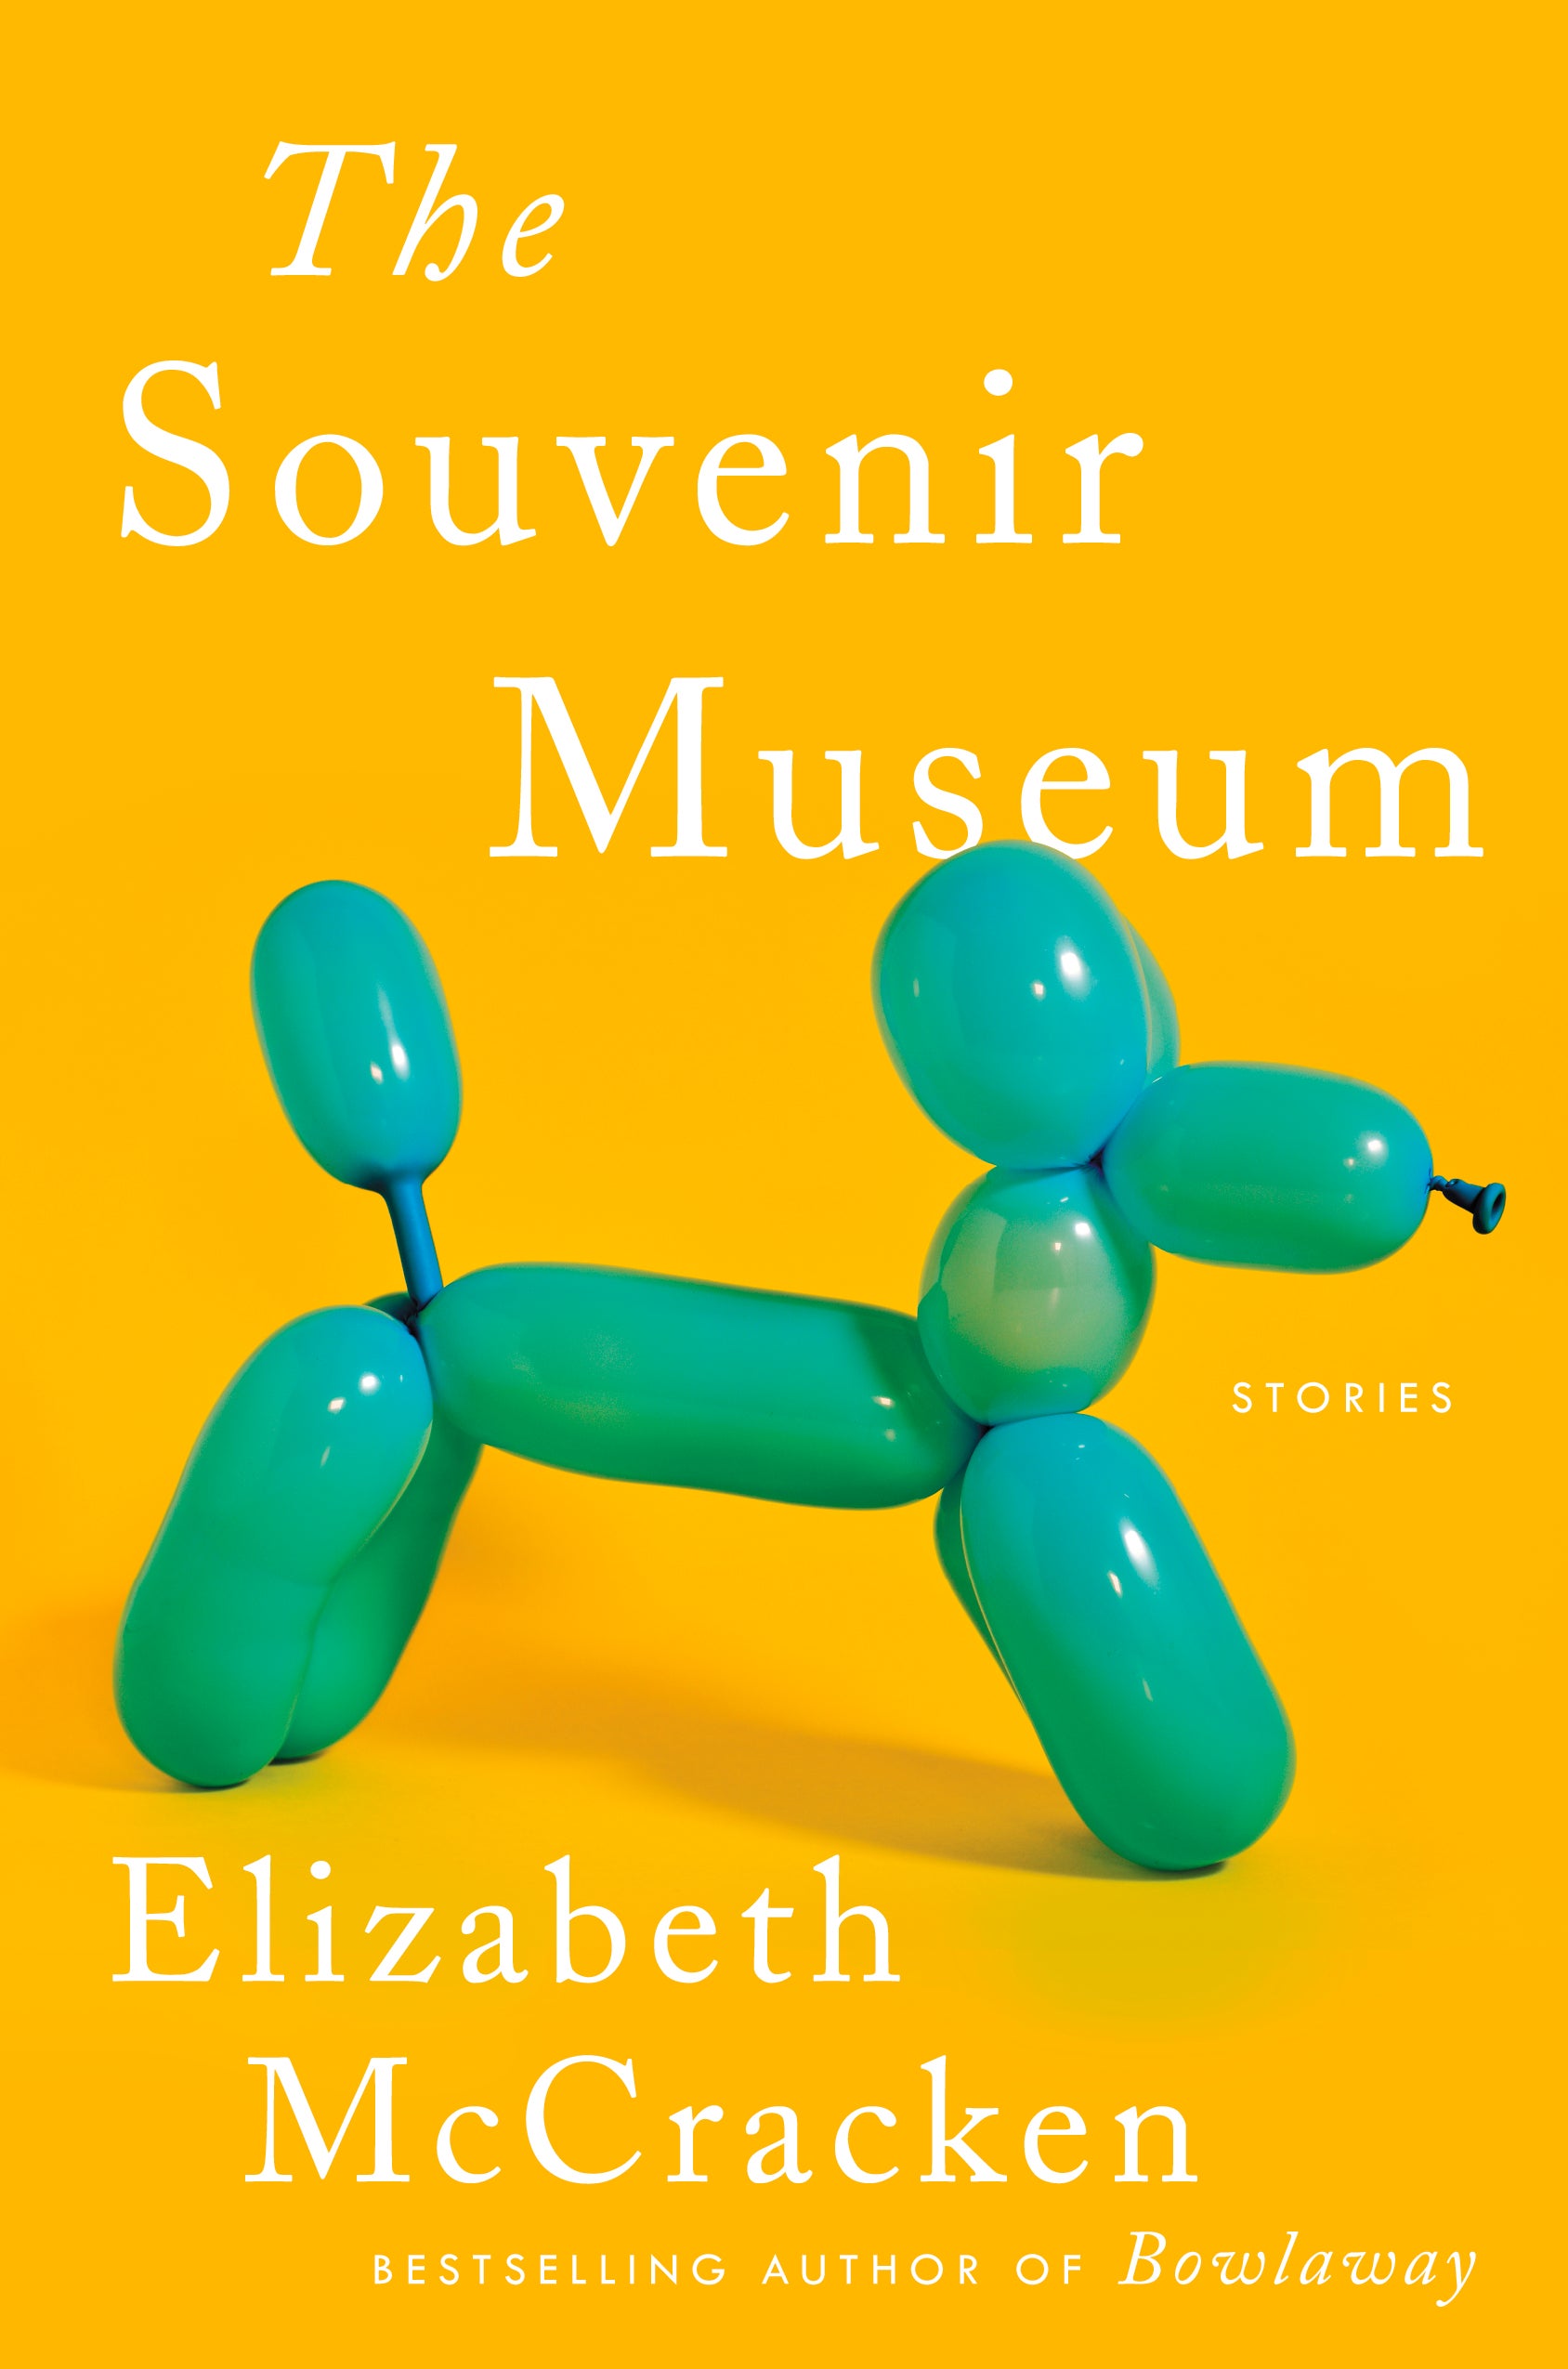 Book Review - The Souvenir Museum